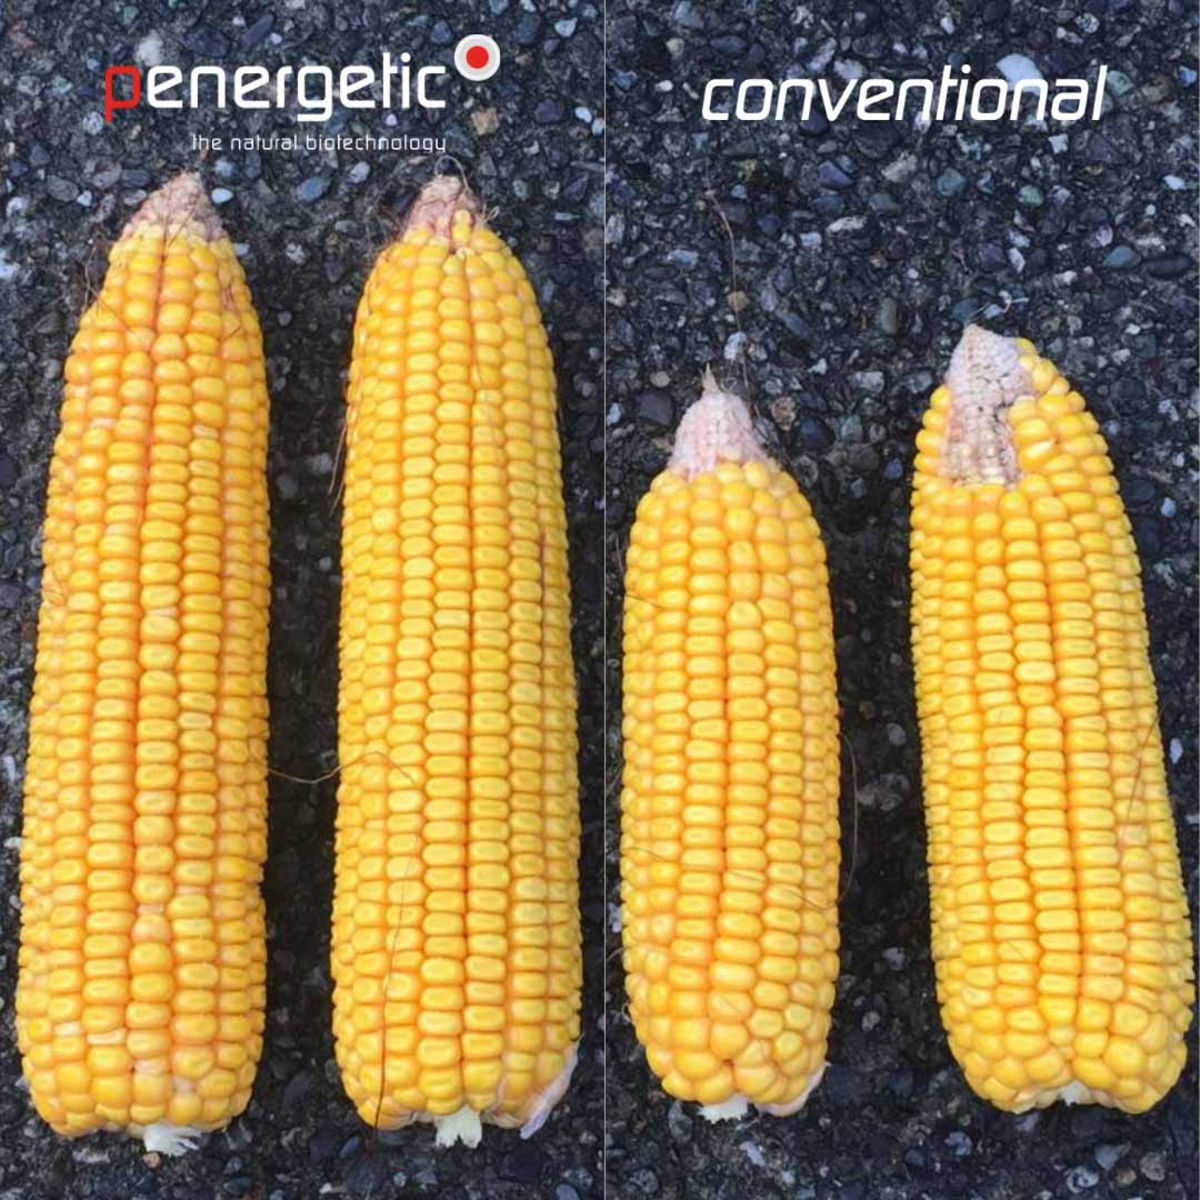 corn comparison cob with Penergetic